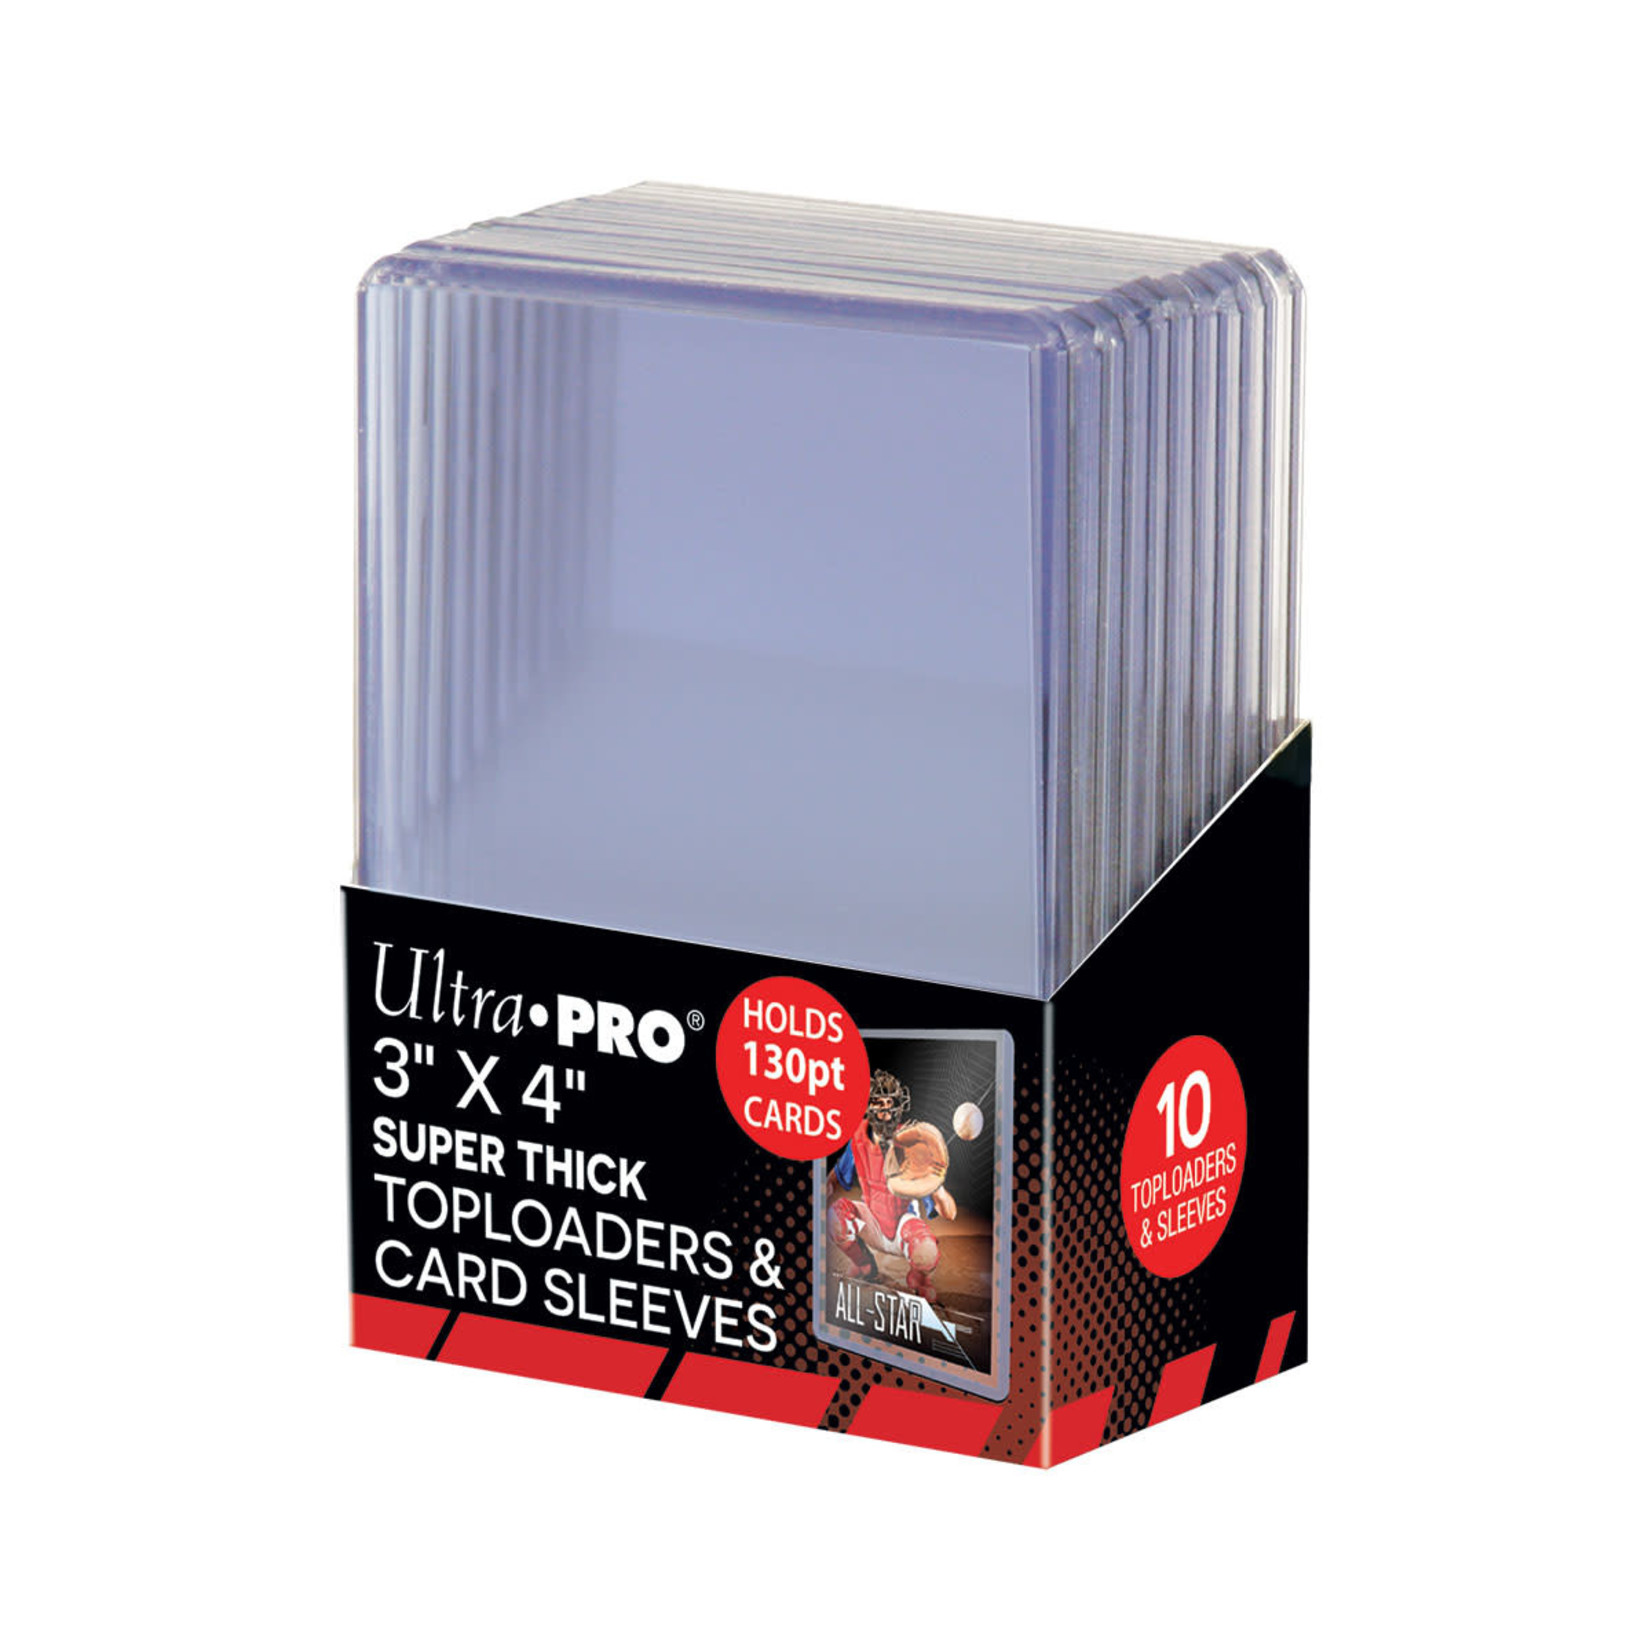 Ultra Pro UP Toploader + Card Sleeves 10pk